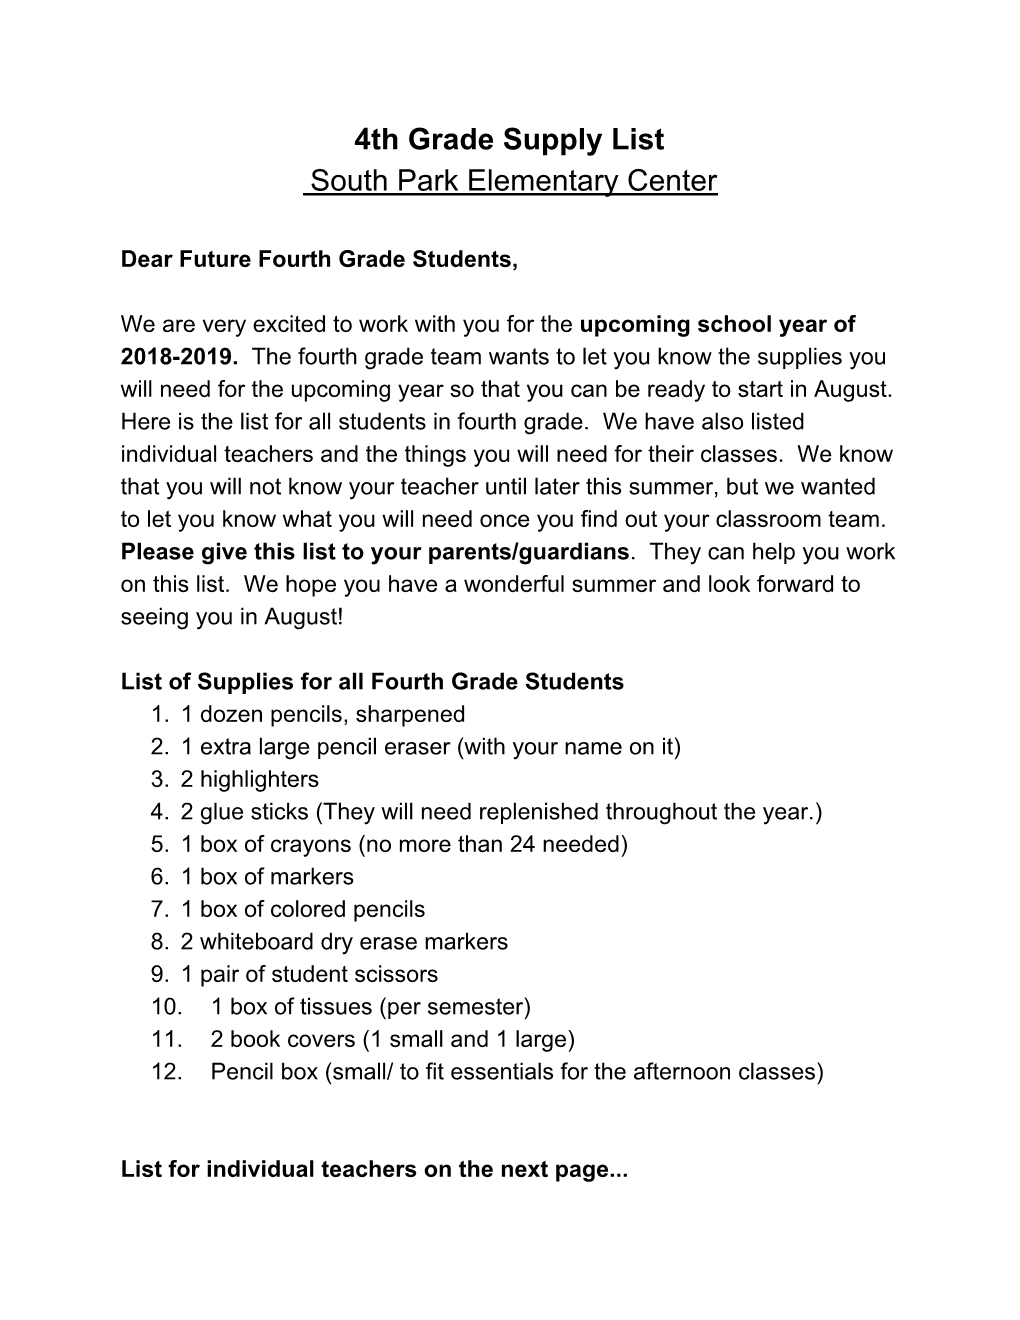 4Th Grade Supply List South Park Elementary Center